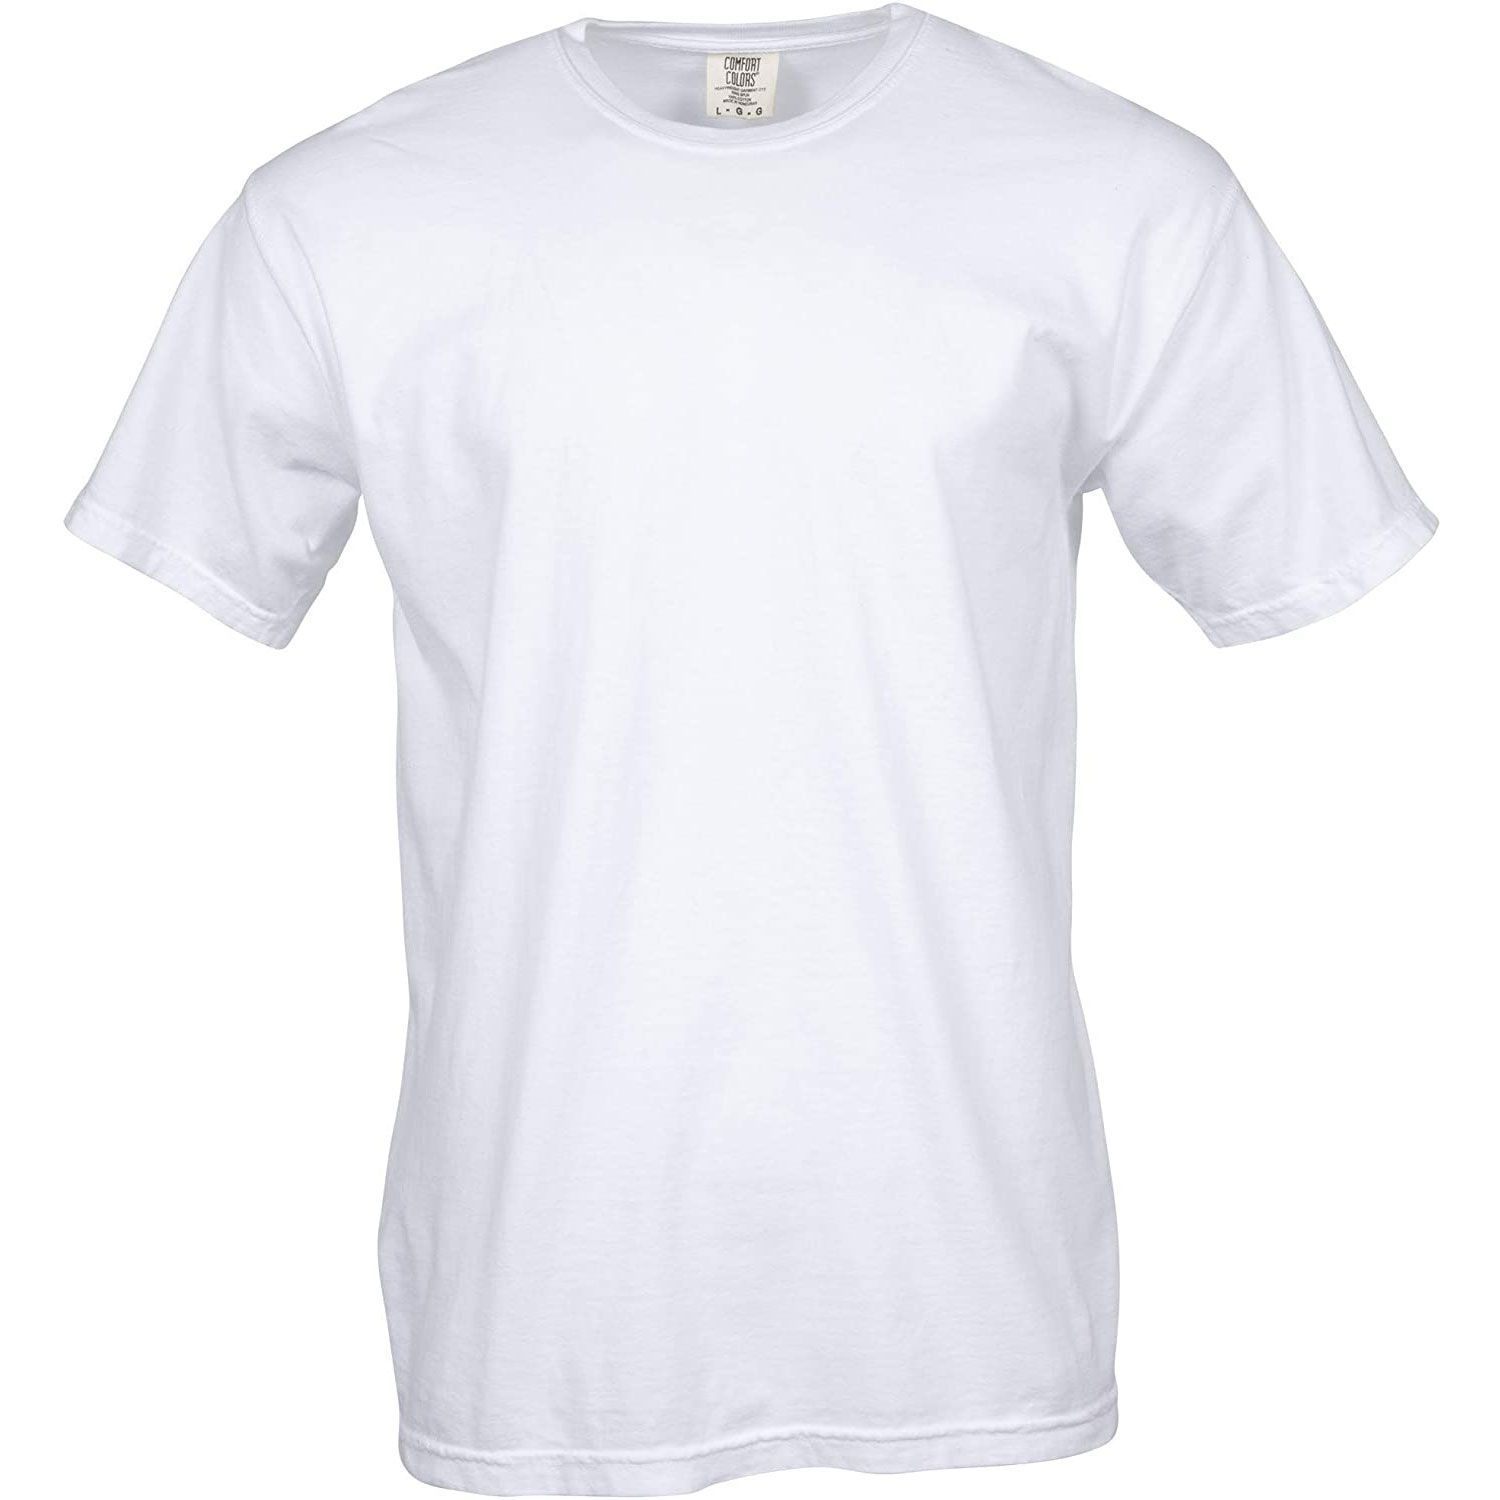 plain white t shirt mens